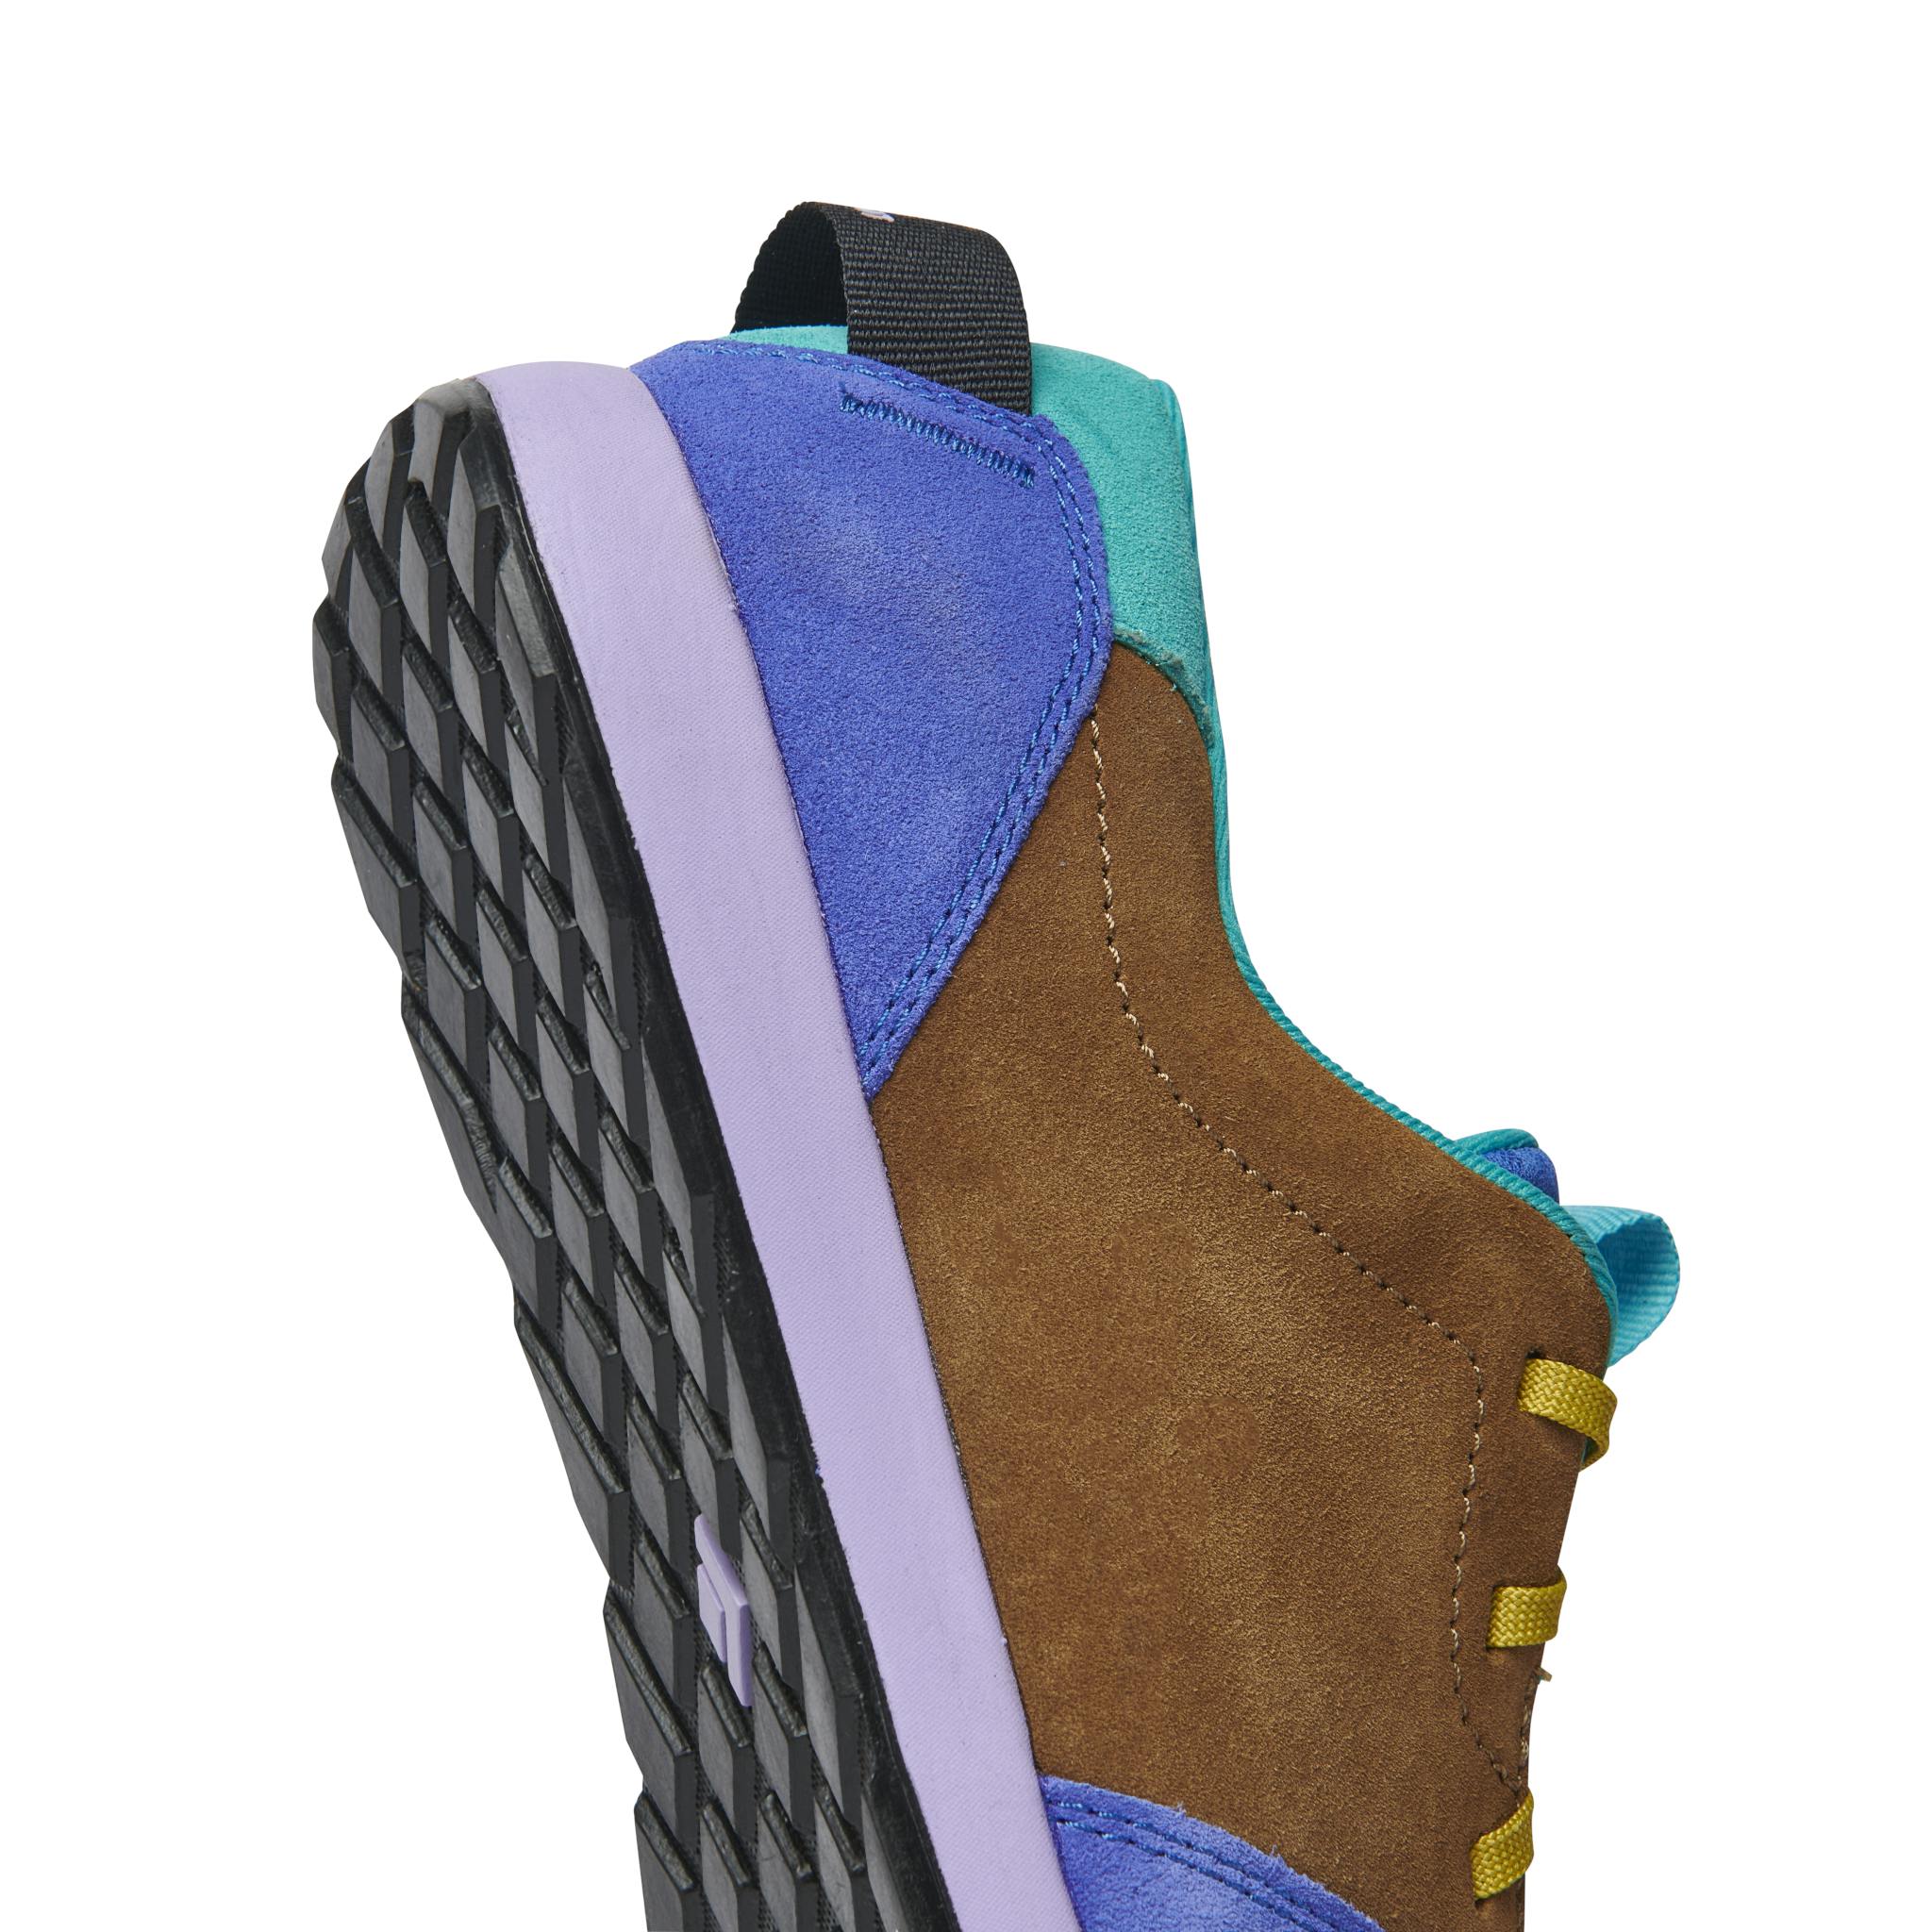 Detail shot of the Men's Prime shoe heel cup in colorway Dark Curry